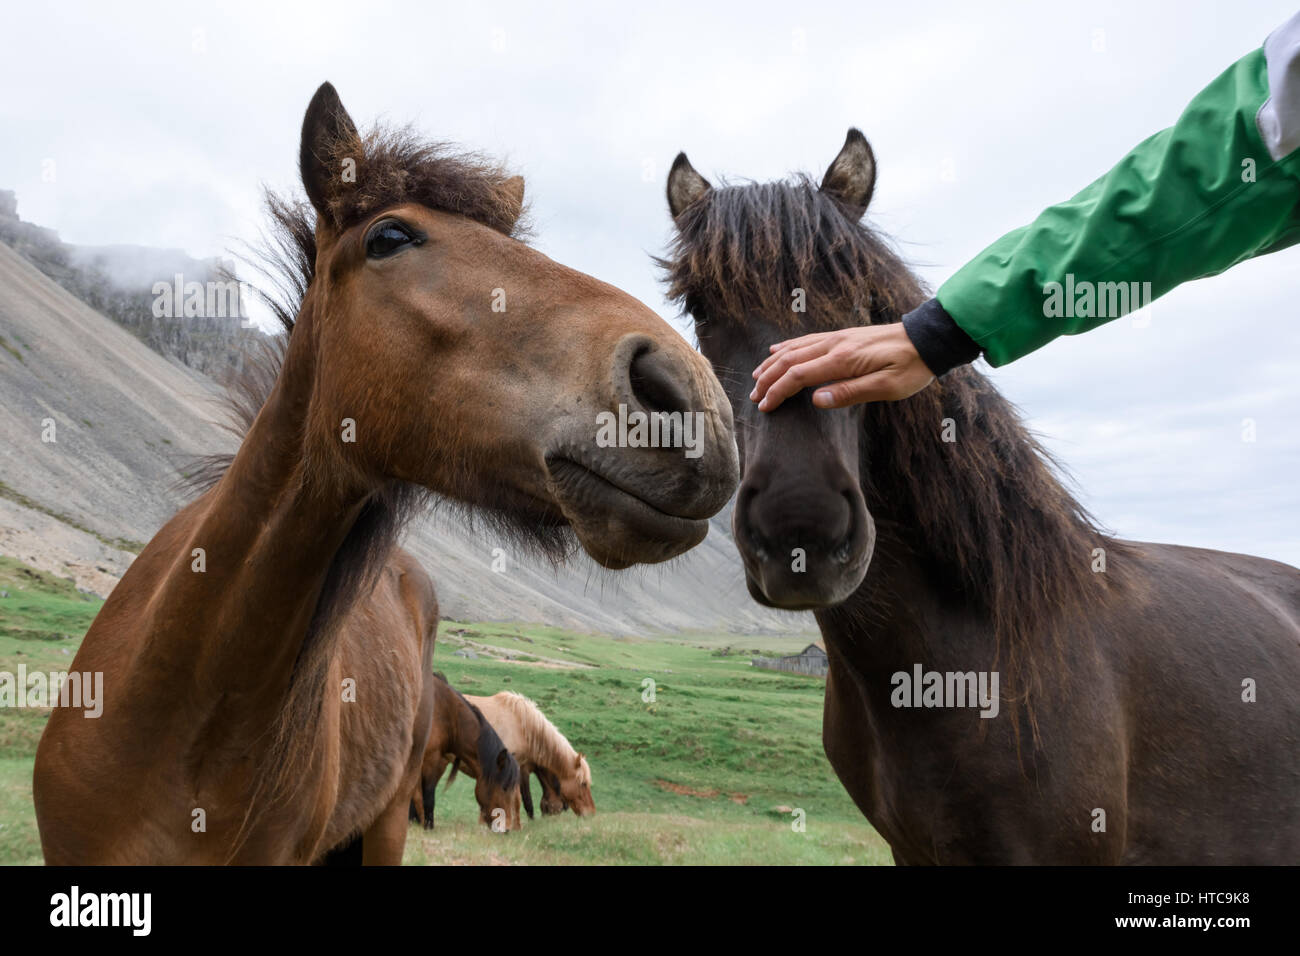 Icelandic horse portrait close up Stock Photo